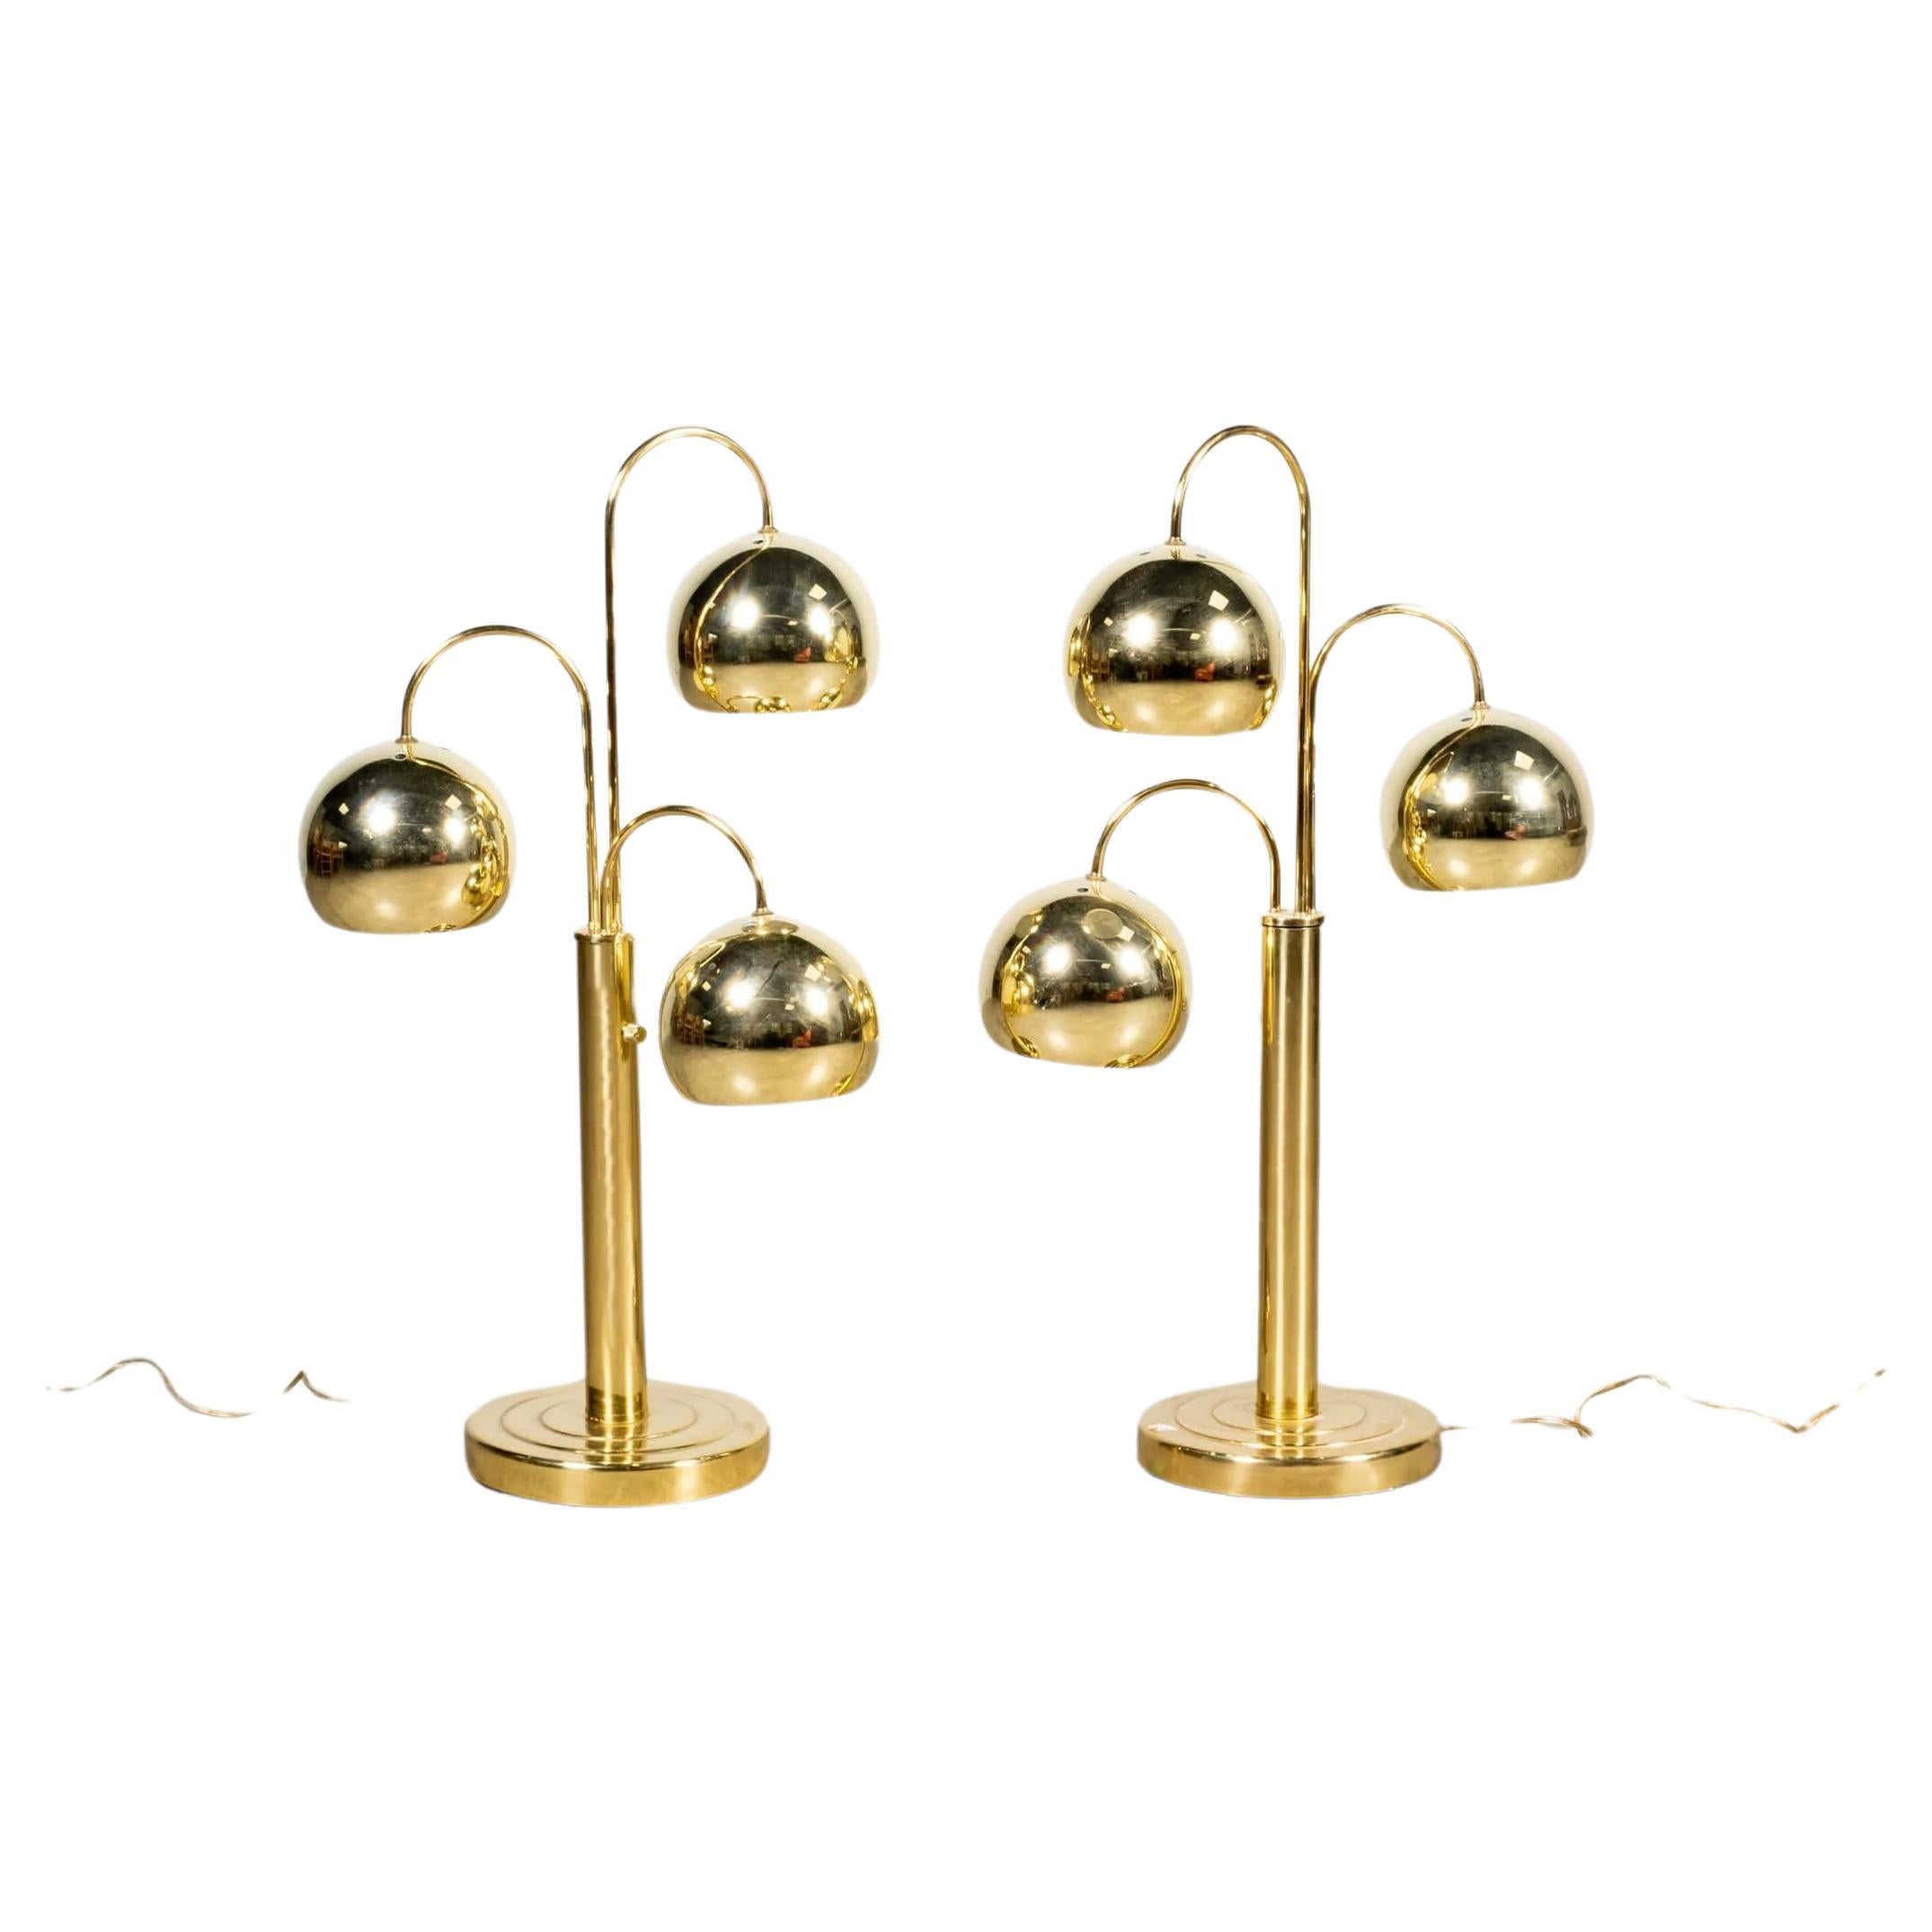 Pair of Brass Ball Table Lamps by Robert Sonneman